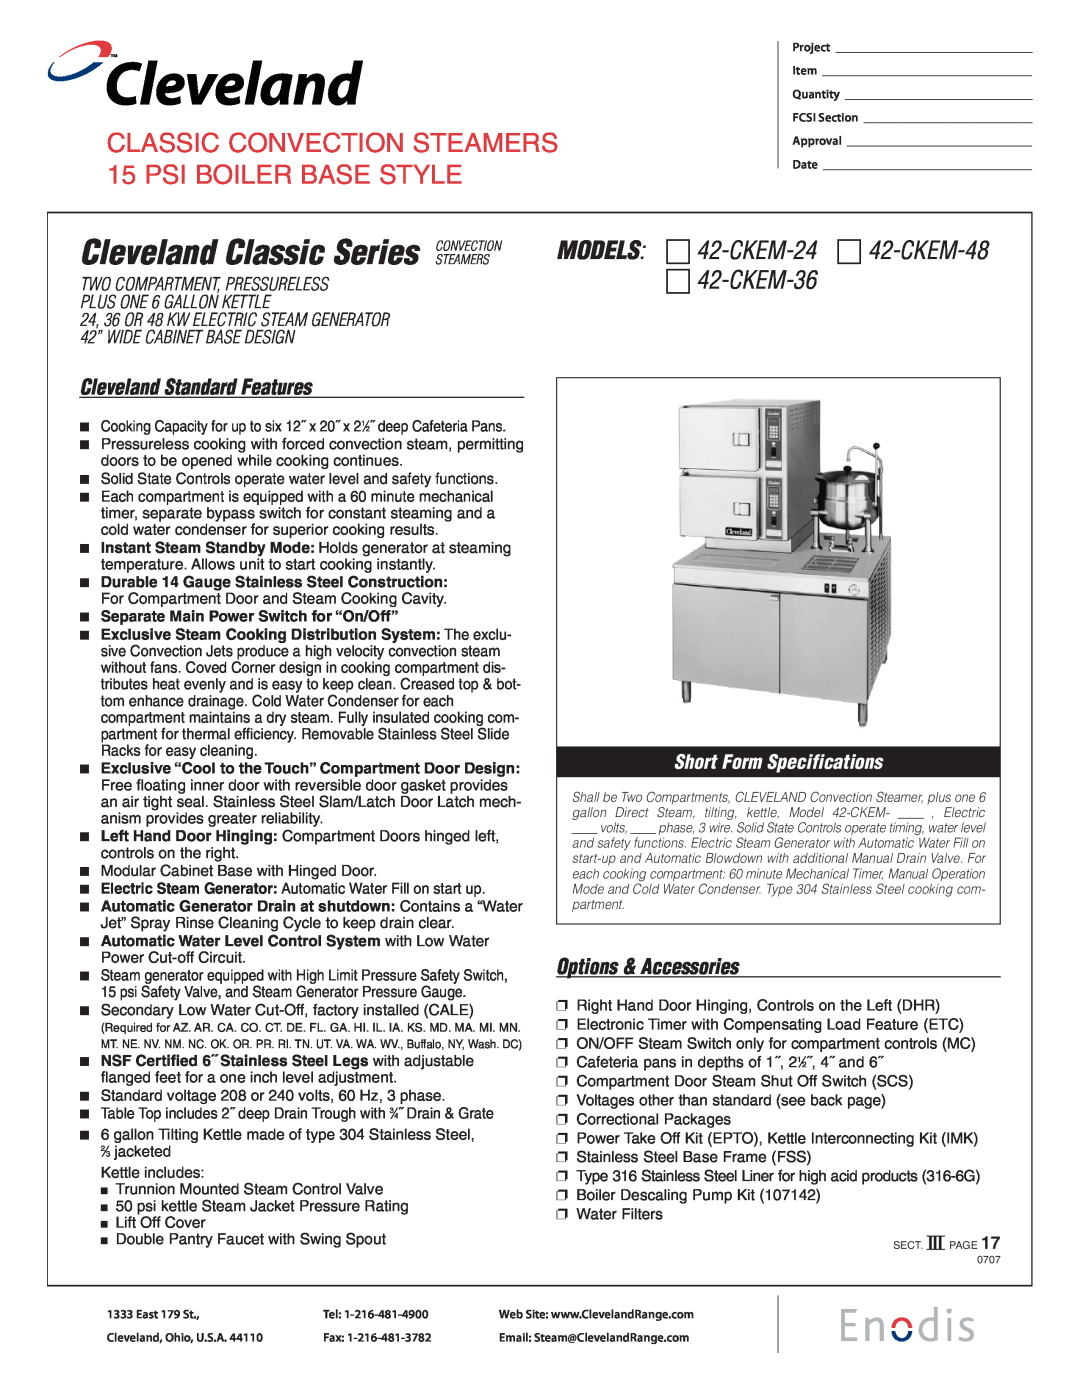 Cleveland Range specifications Cleveland Classic Series, MODELS χχ 42-CKEM-24 χ 42-CKEM-48 42-CKEM-36 